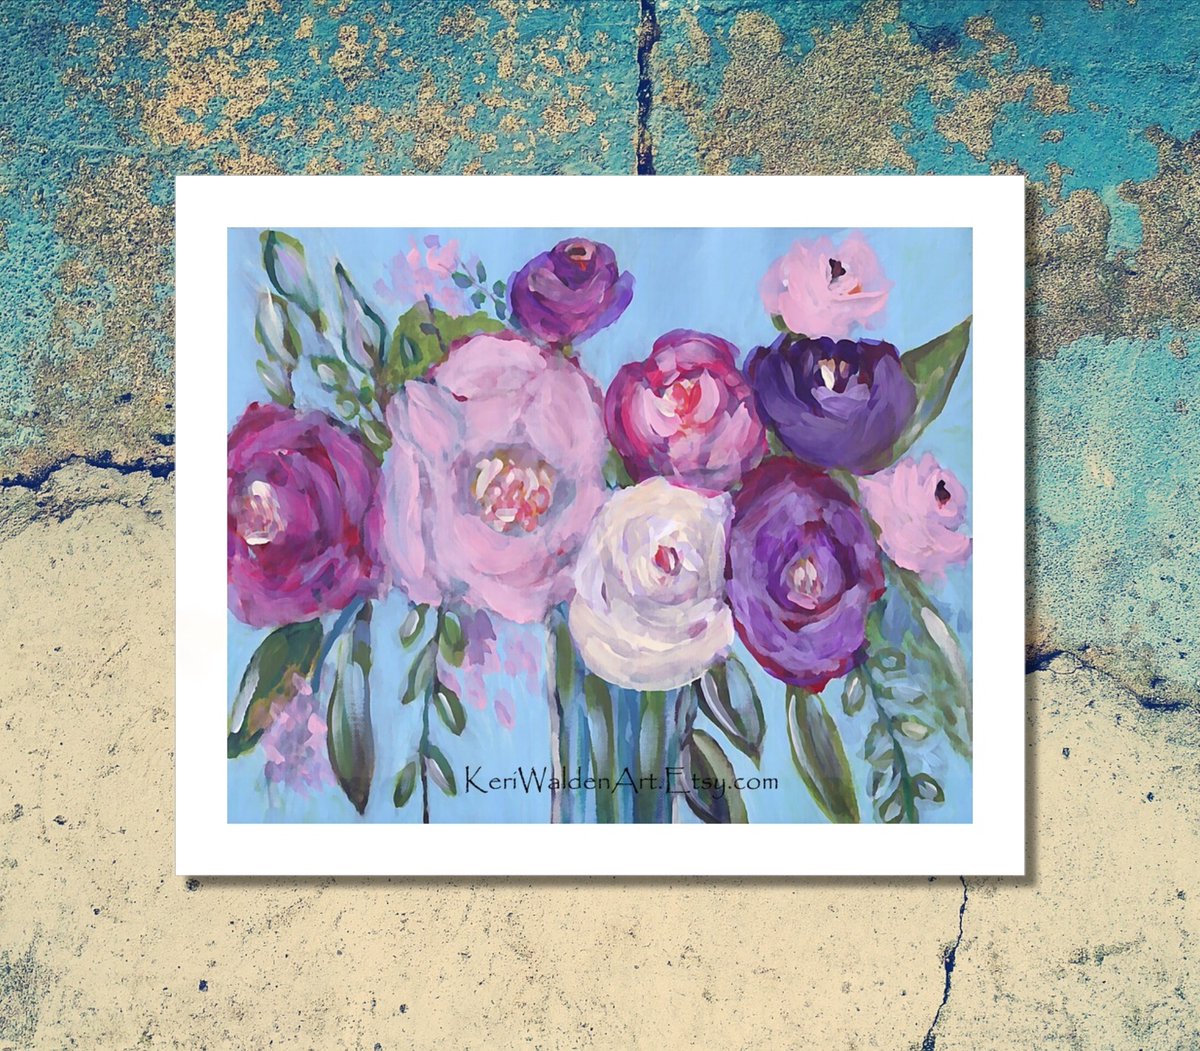 Fantasy floral print 🌸🌼🌹 #artprint #floralpainting #acrylicpainting #homedecor #fantasyfloral #roses #keriwaldenart #etsyshop